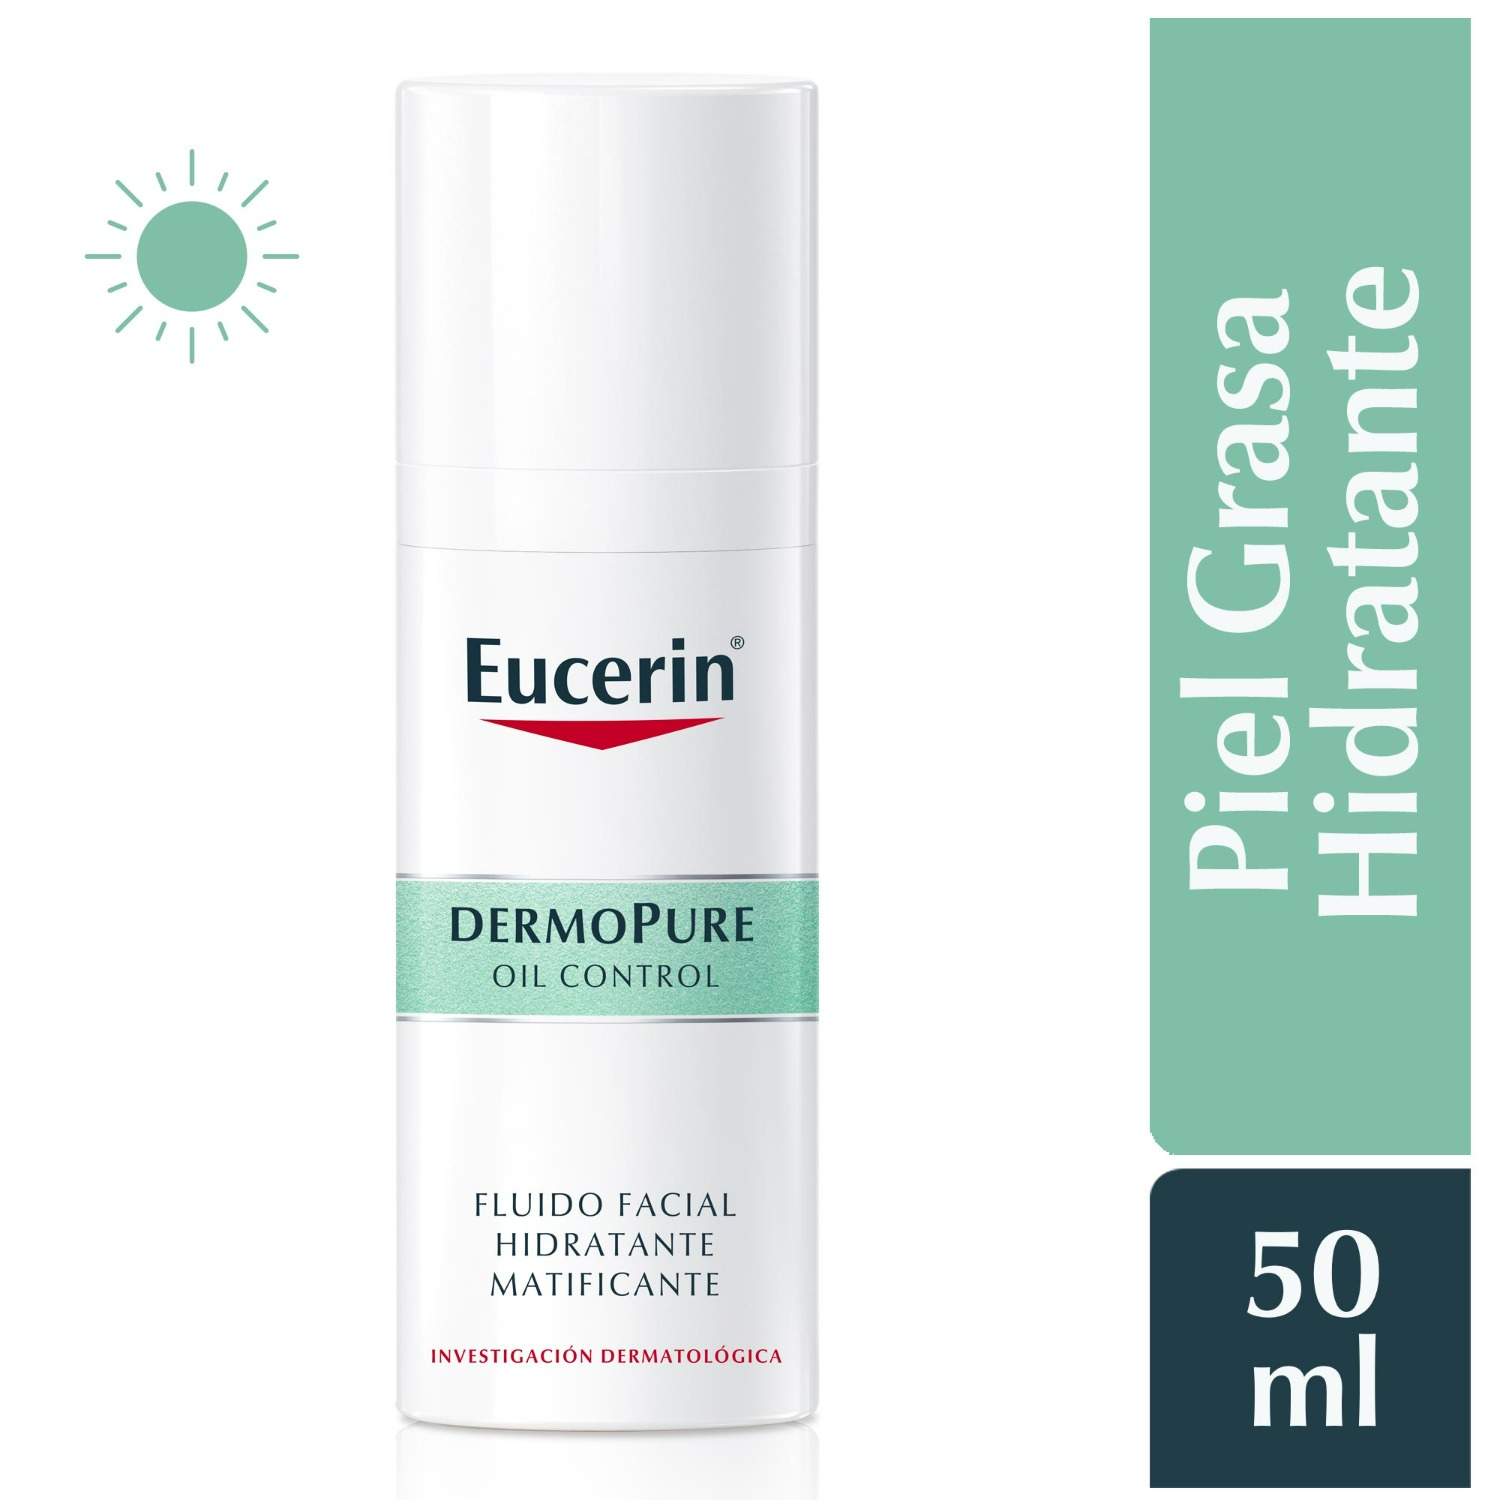 Eucerin DermoPure Oil Control Fluido Facial Matificante x 50 ml